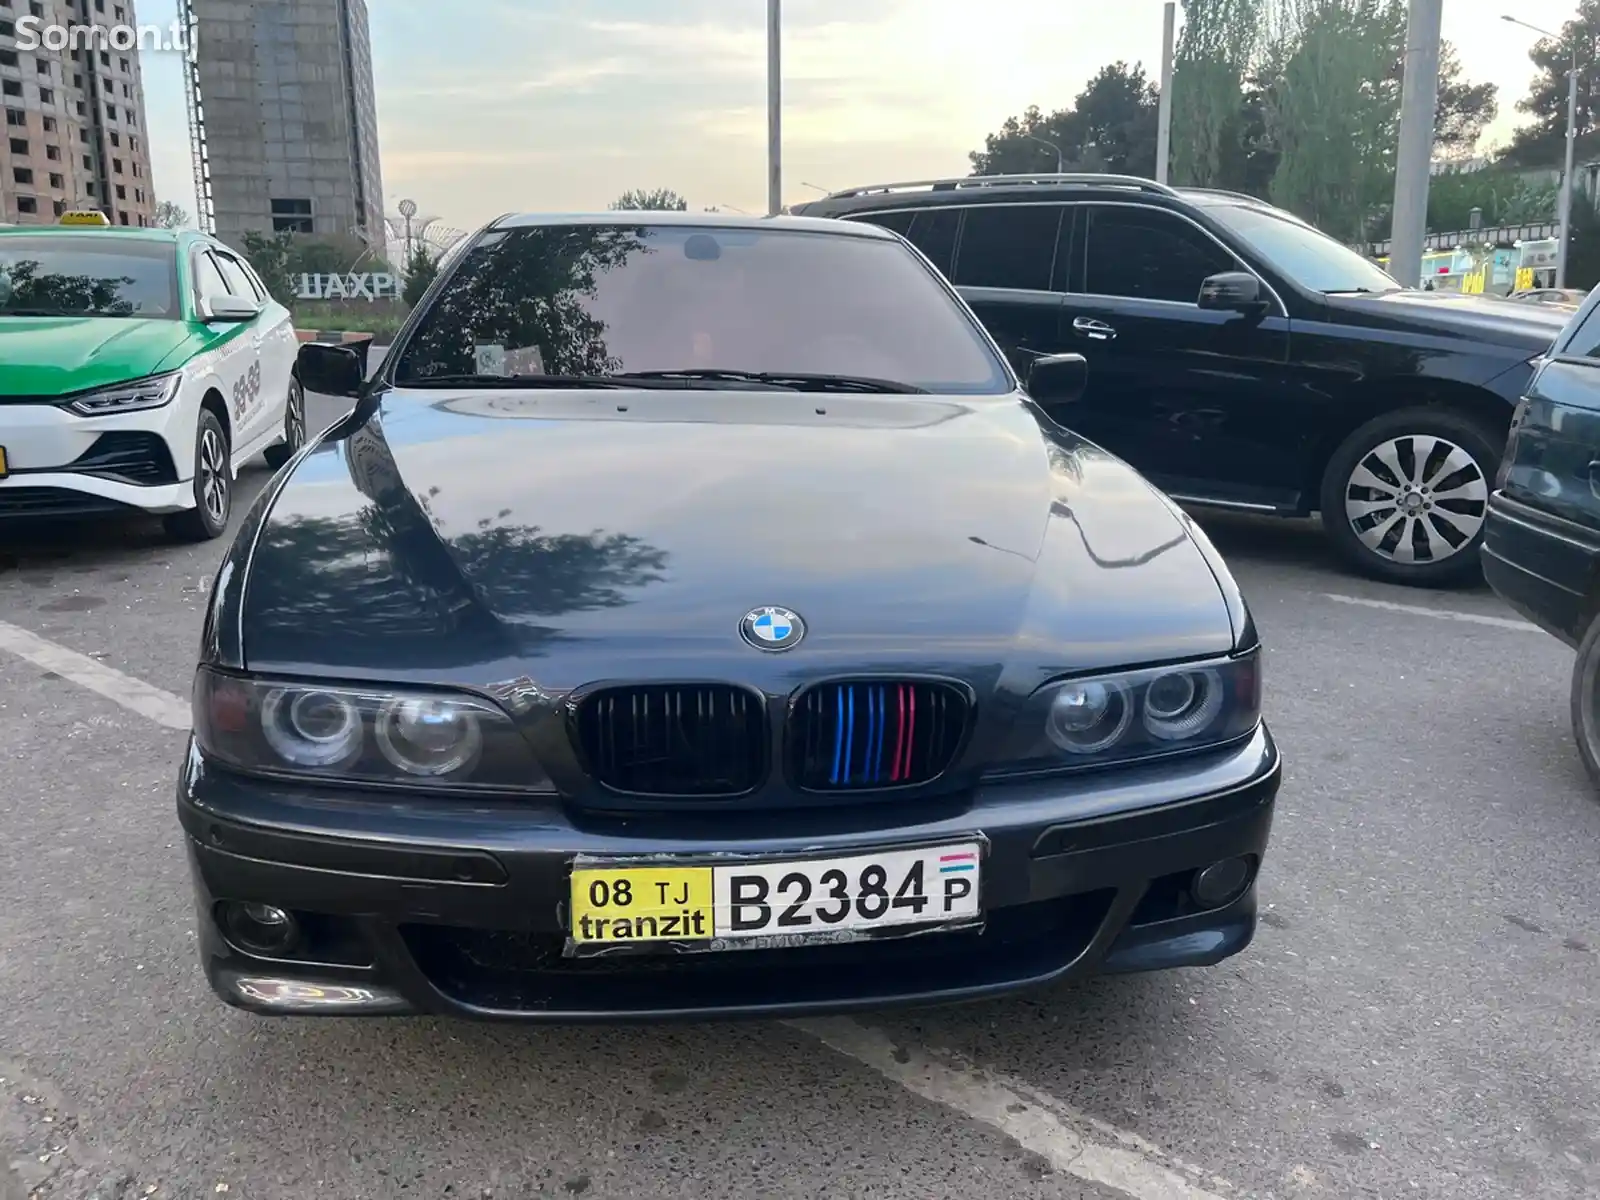 BMW 1 series, 1997-2